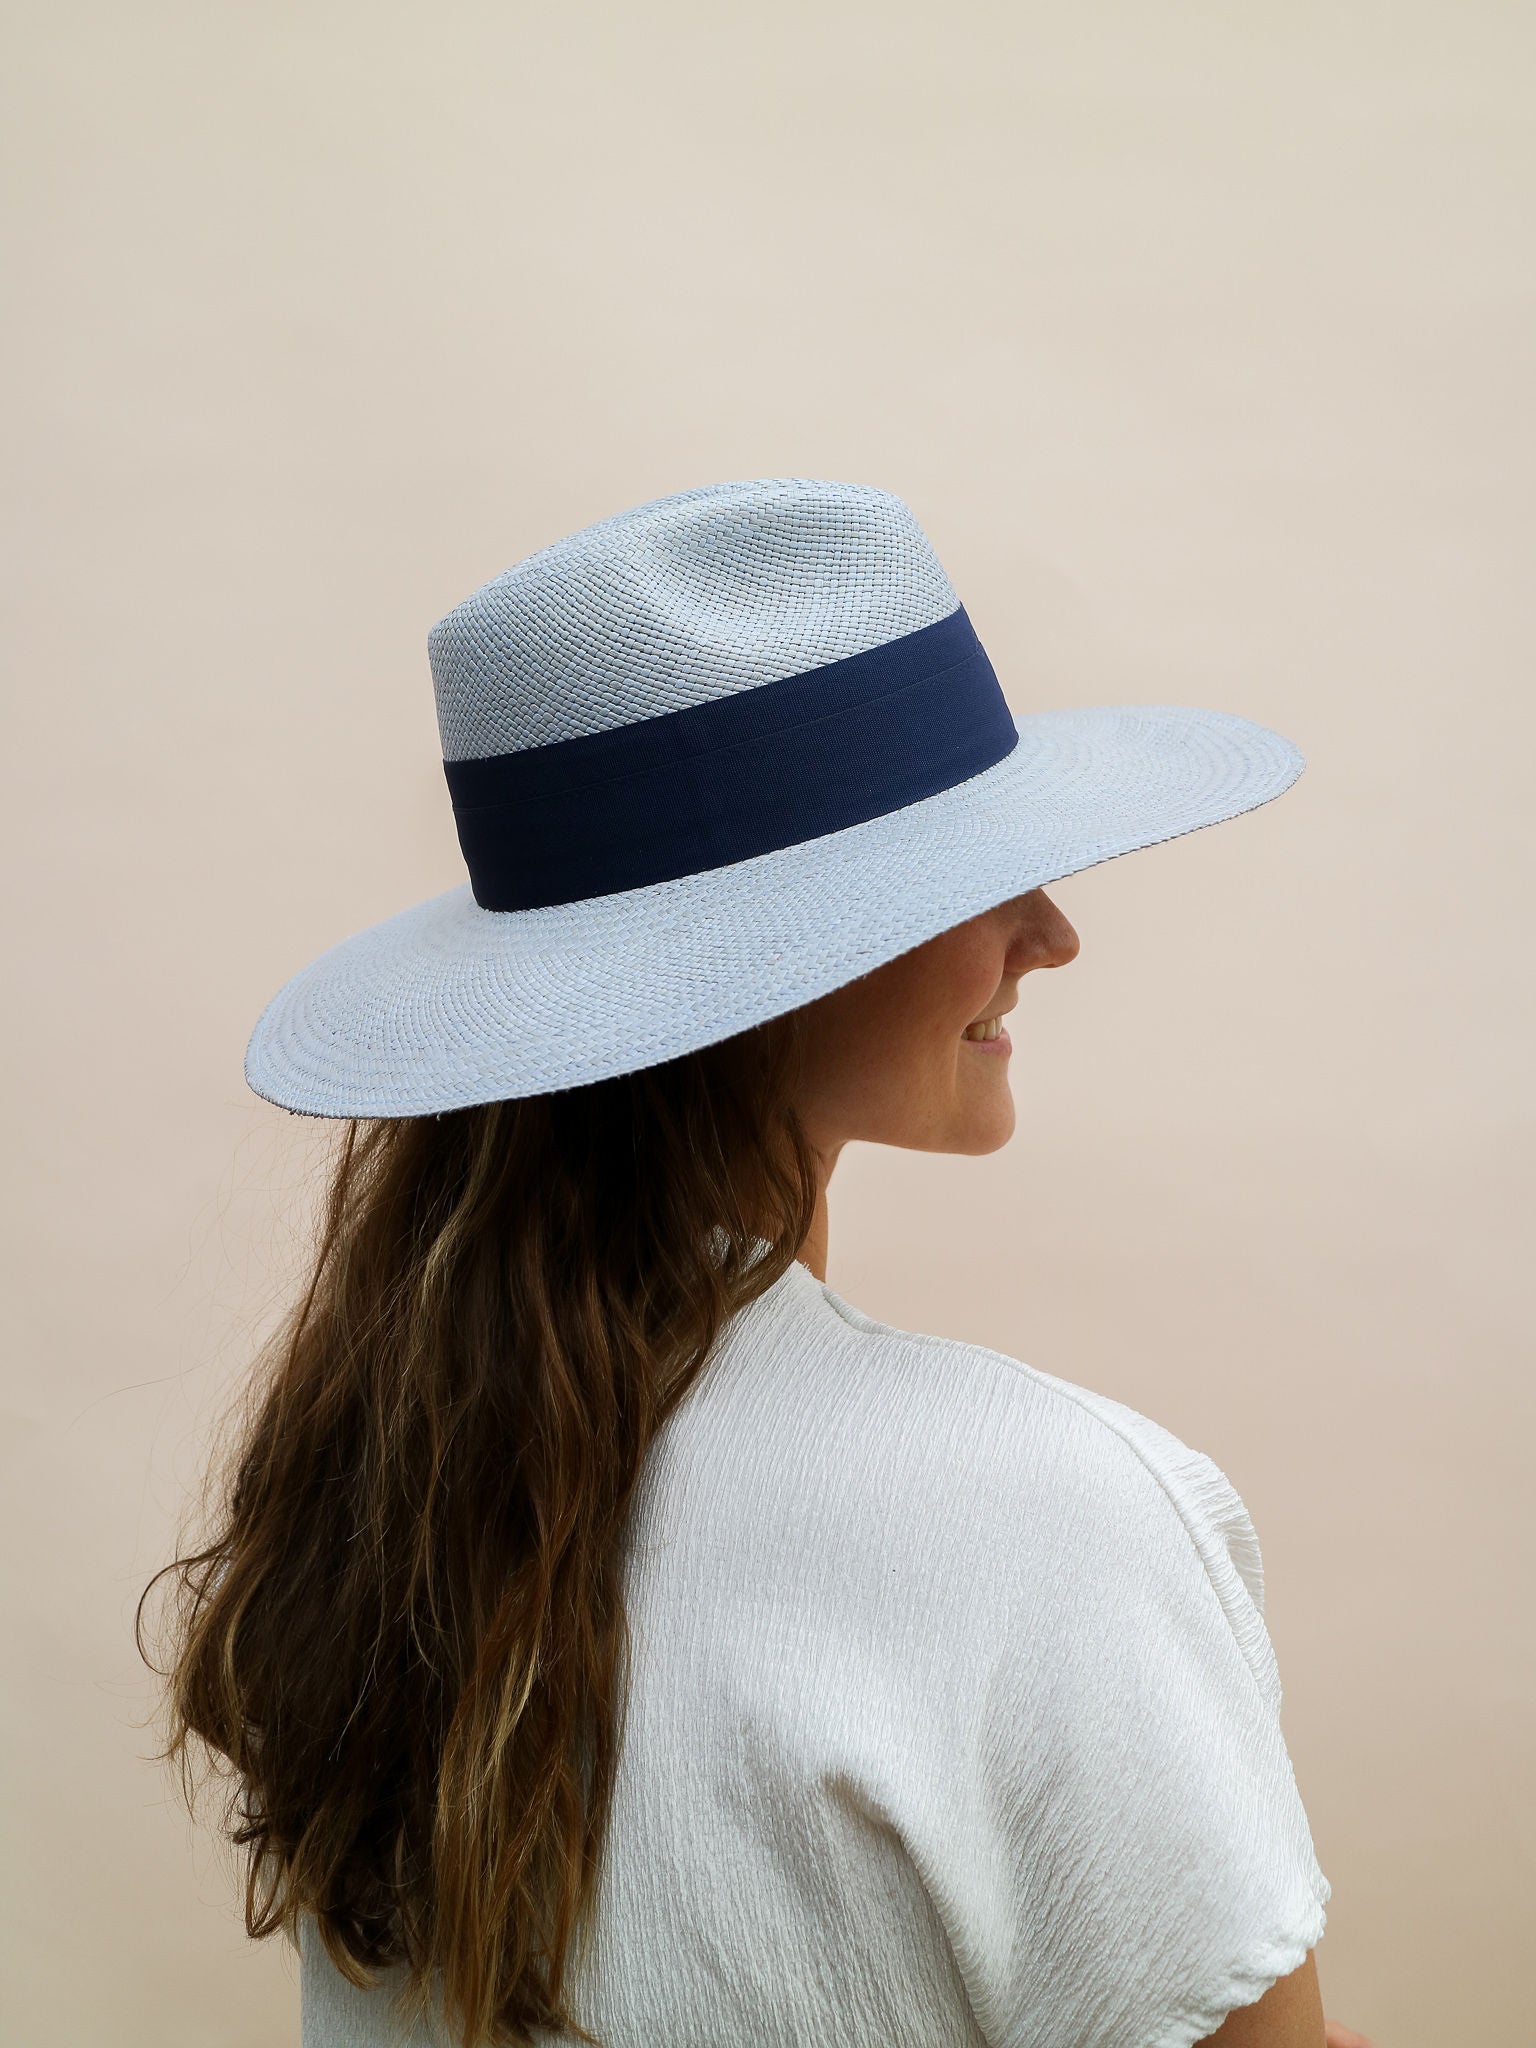 blue panama hat for women